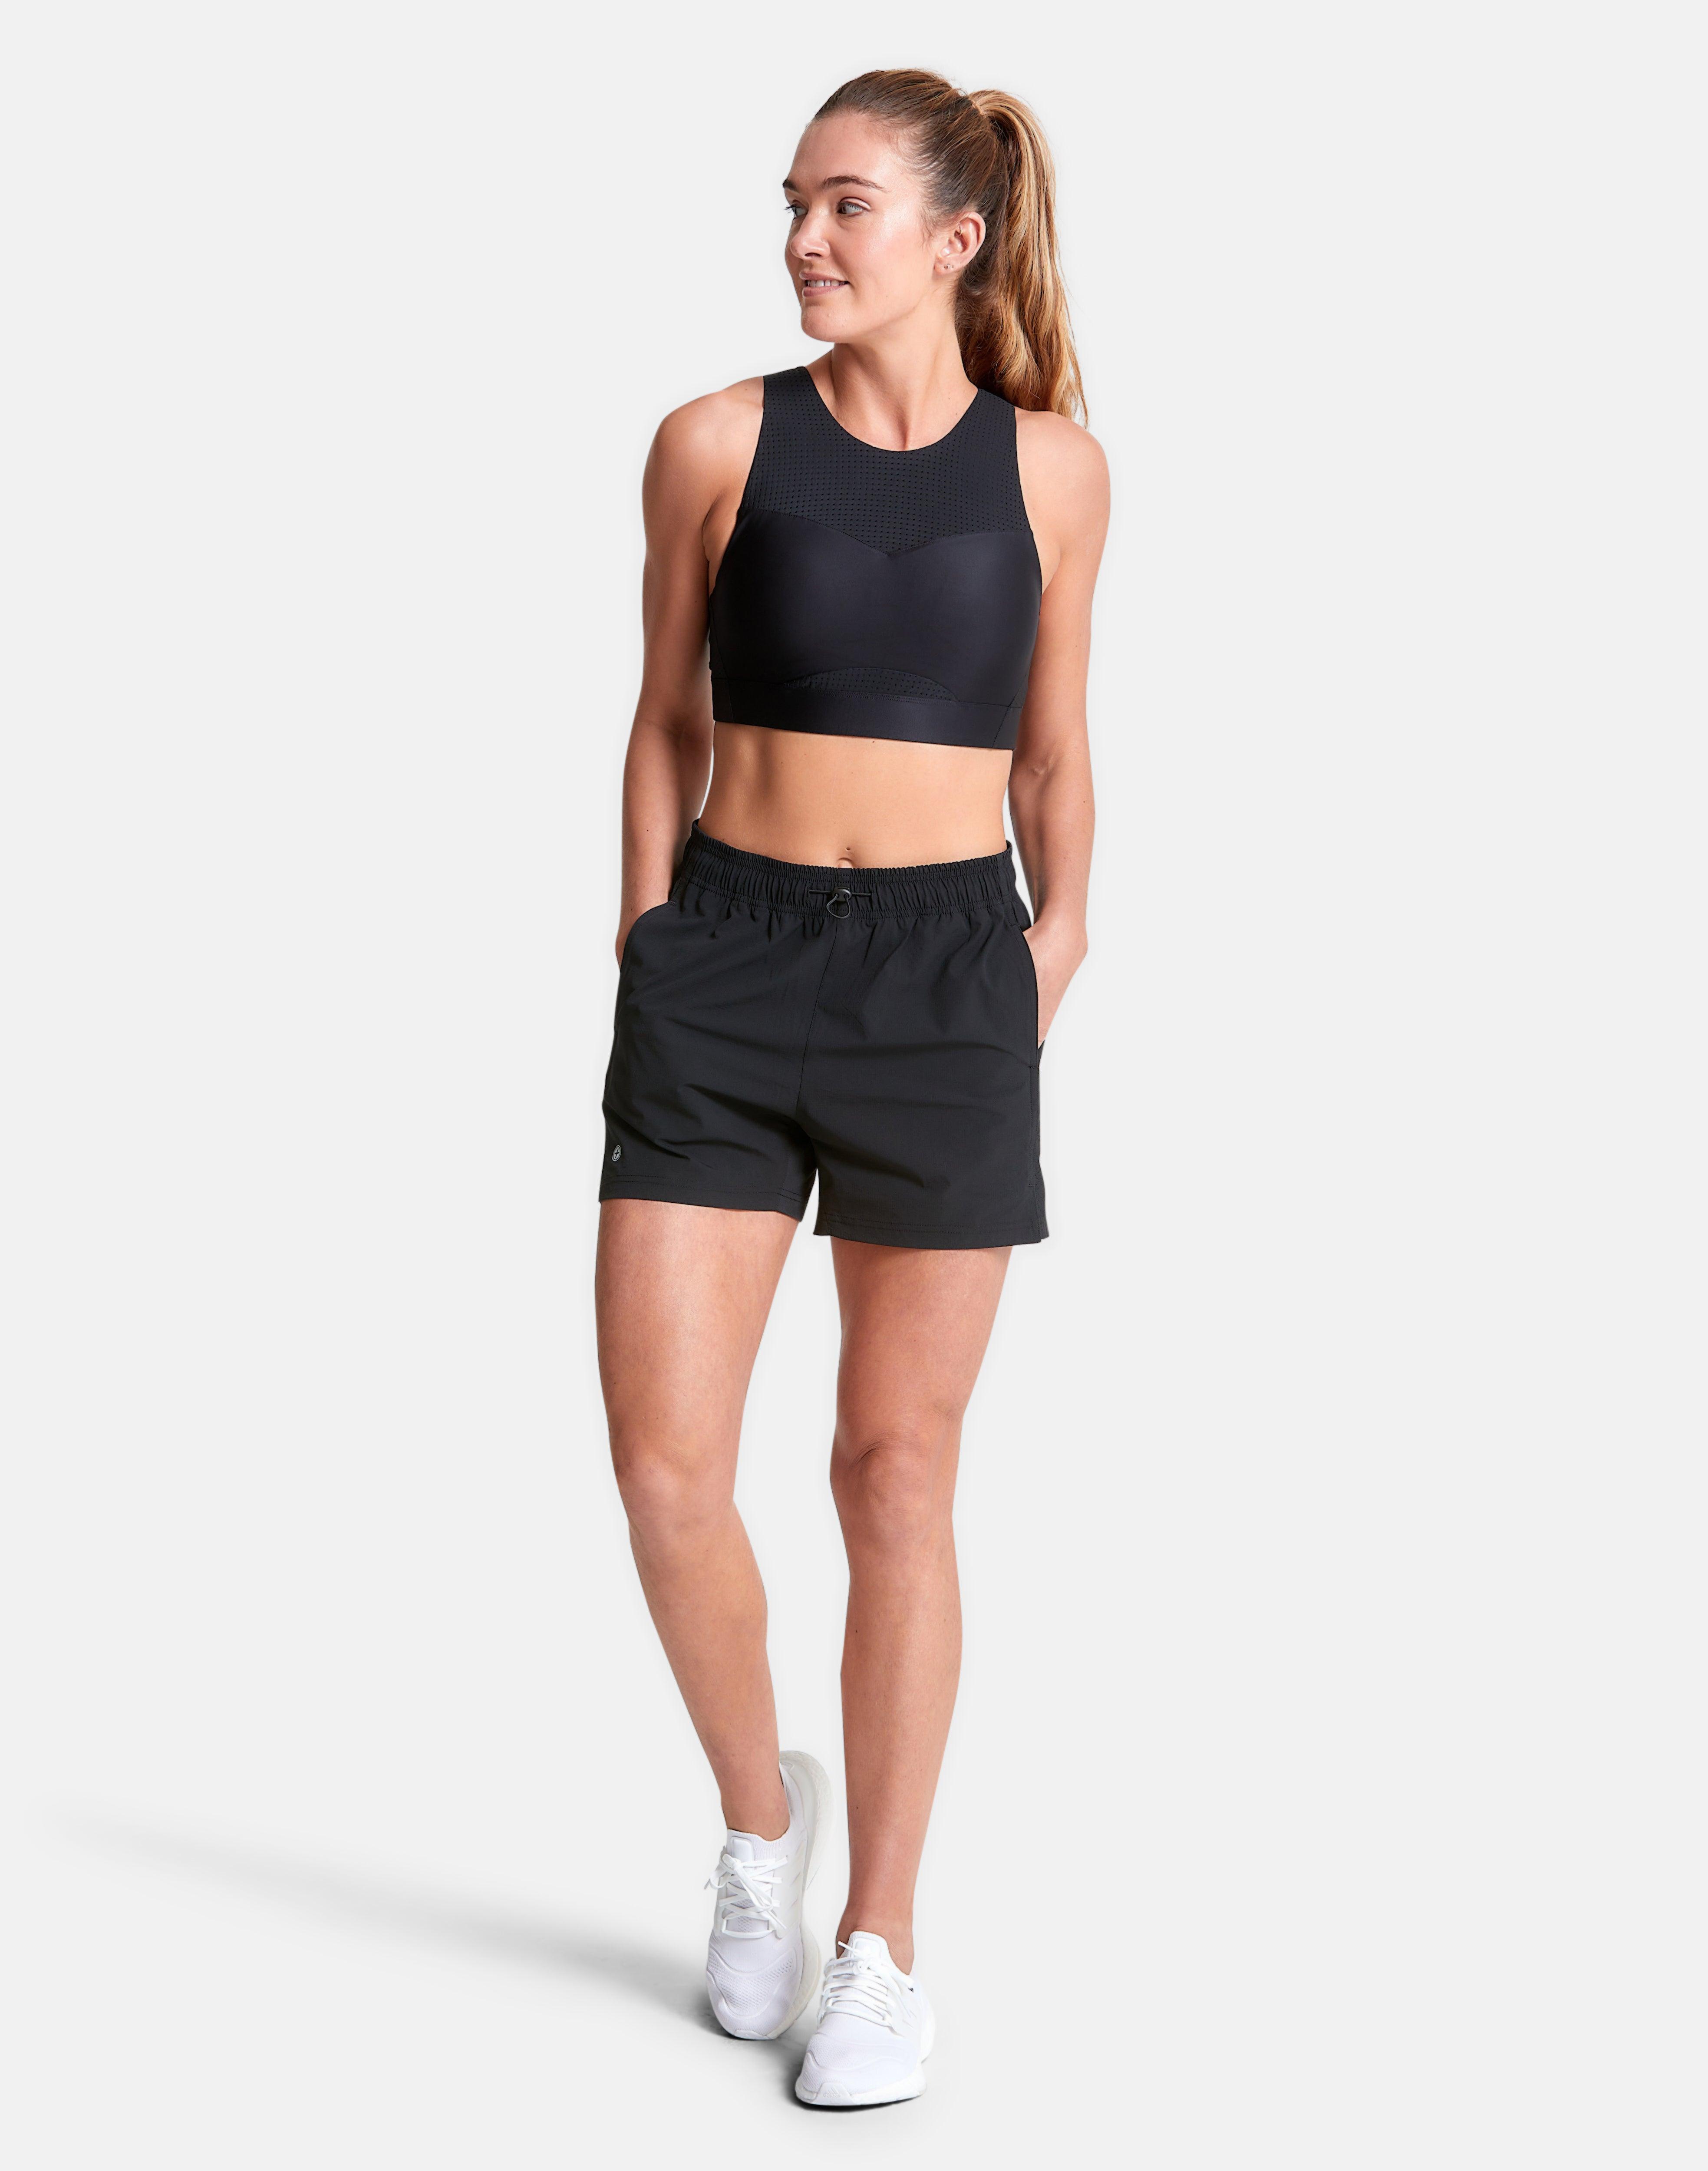 Celero Shorts in Jet Black - Shorts - Gym+Coffee IE